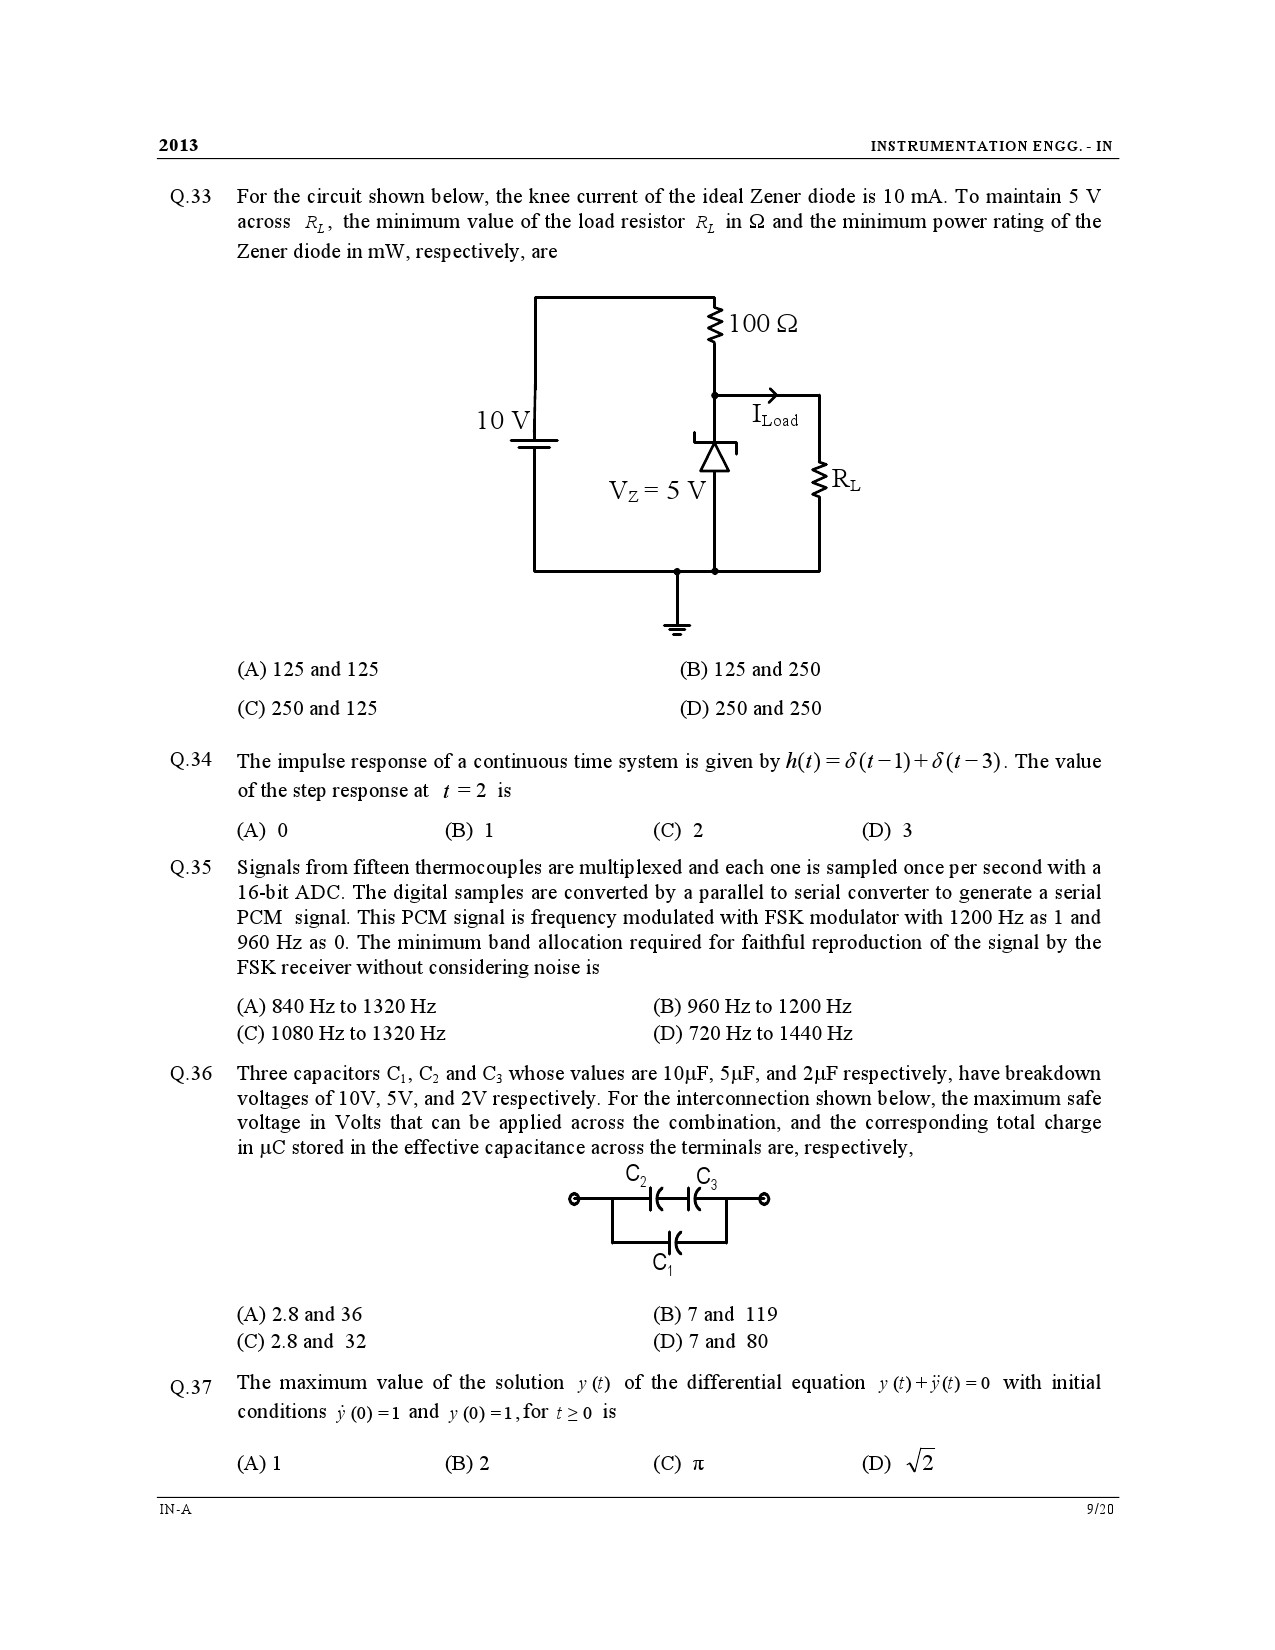 GATE Exam Question Paper 2013 Instrumentation Engineering 9